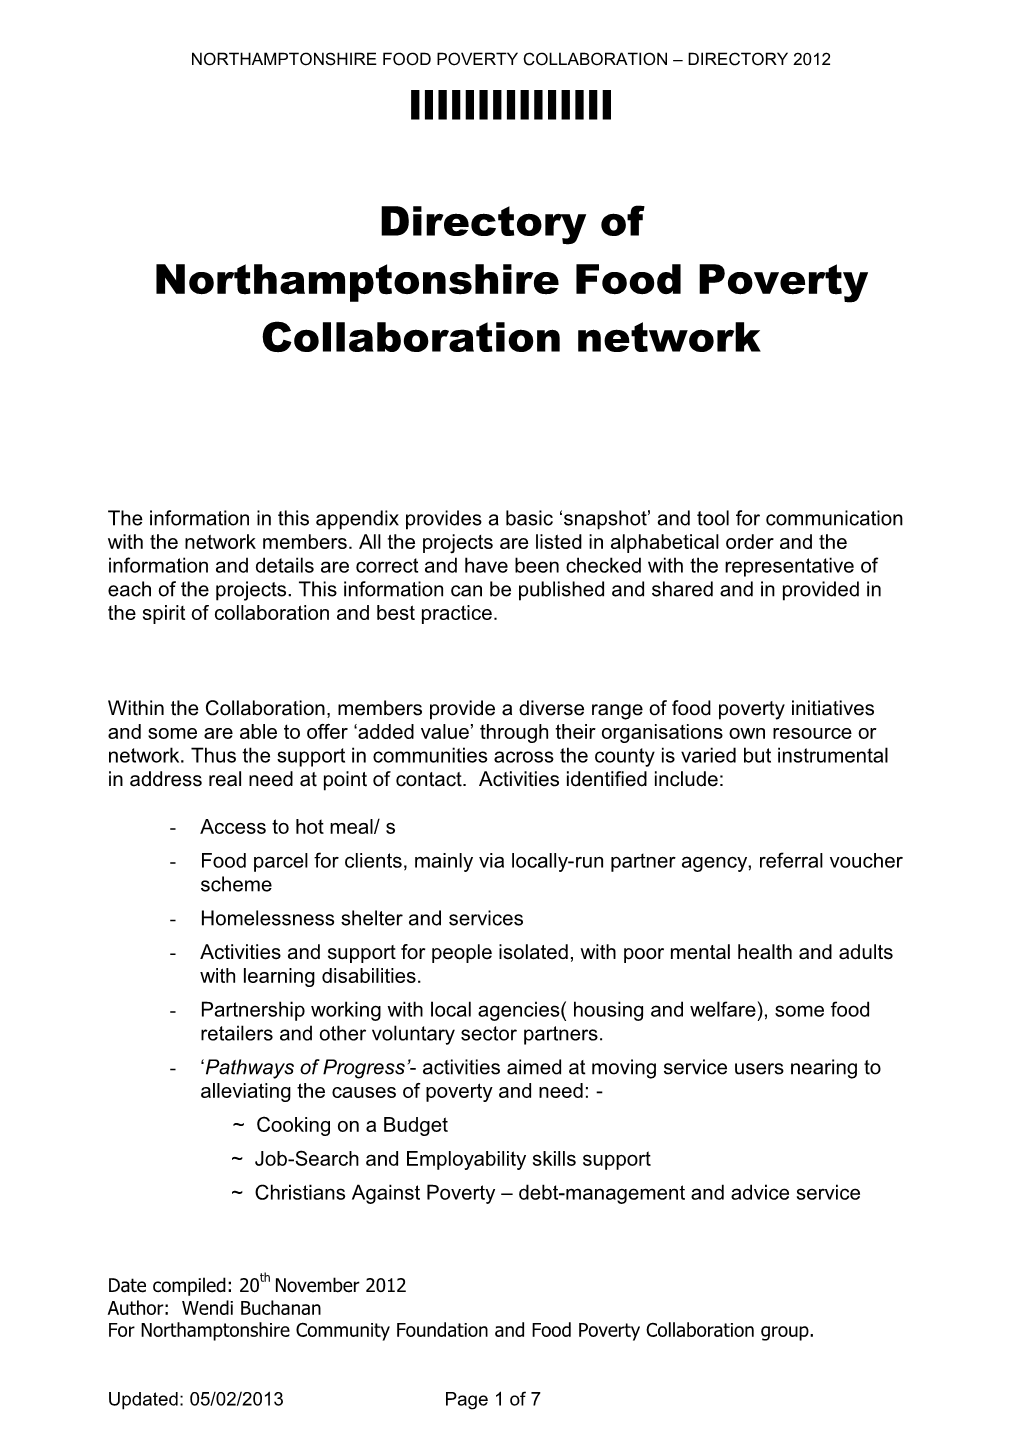 Directory of Northamptonshire Food Poverty